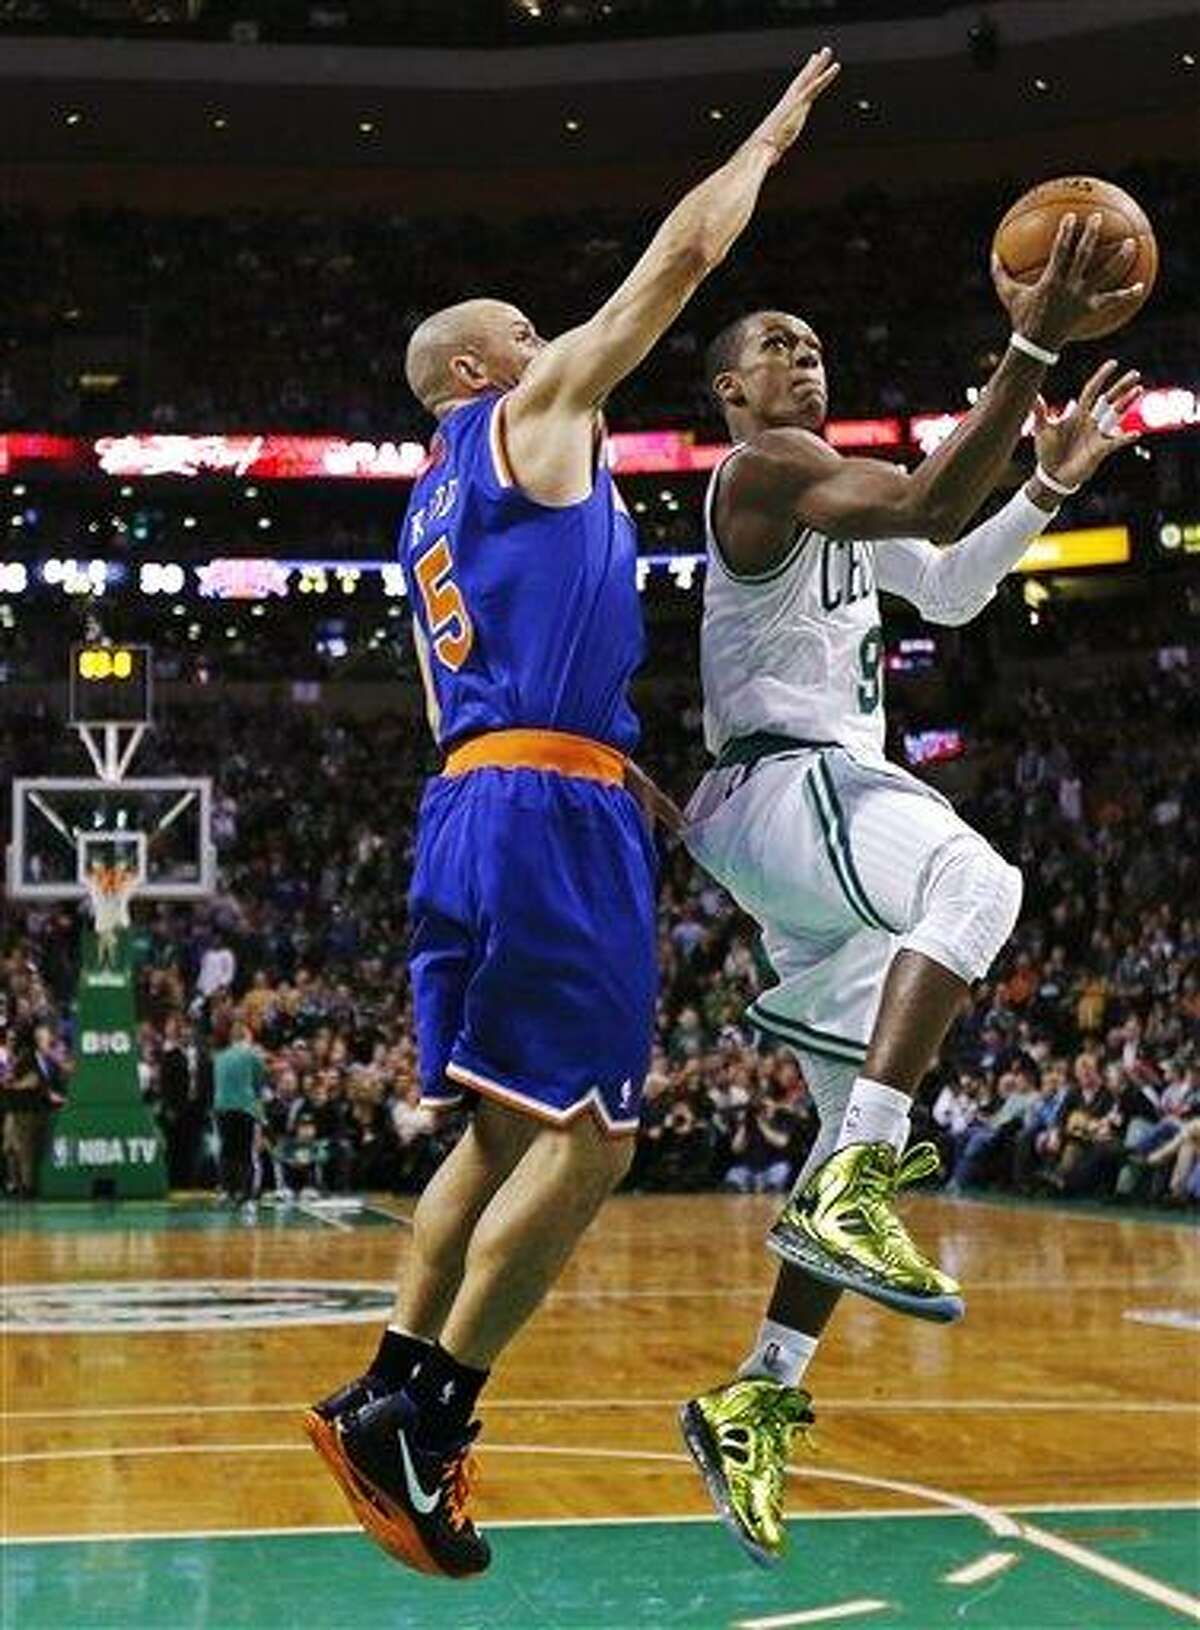 Rajon Rondo able to play in Celtics opener - The Boston Globe